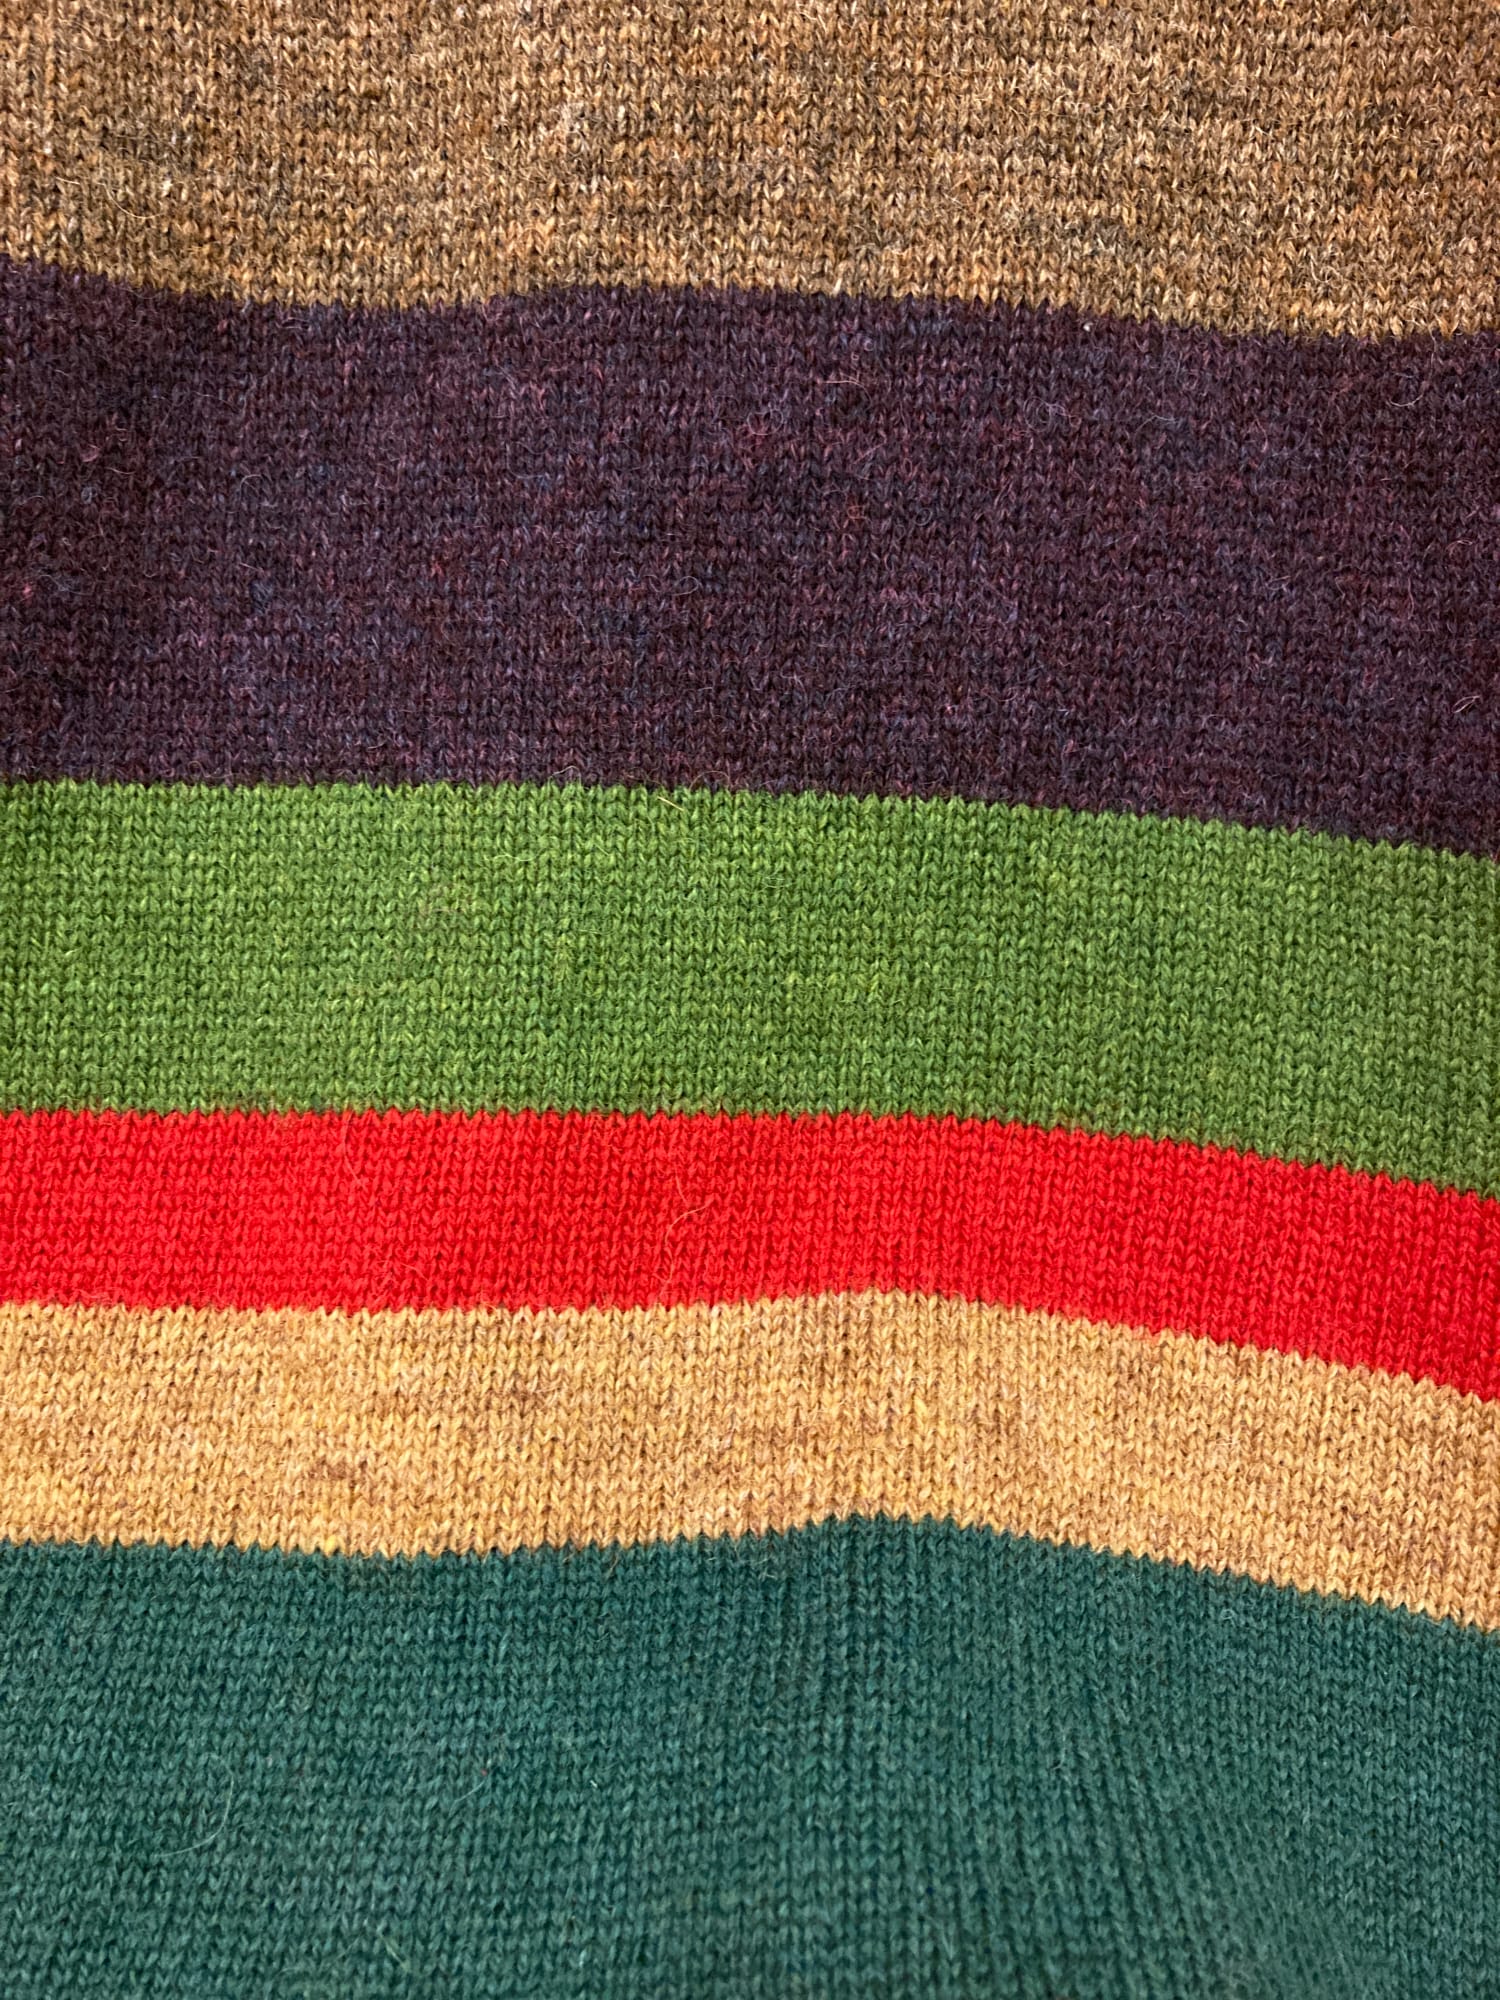 Comme des Garcons Homme Plus AW1996 brown multicolour striped wool jumper